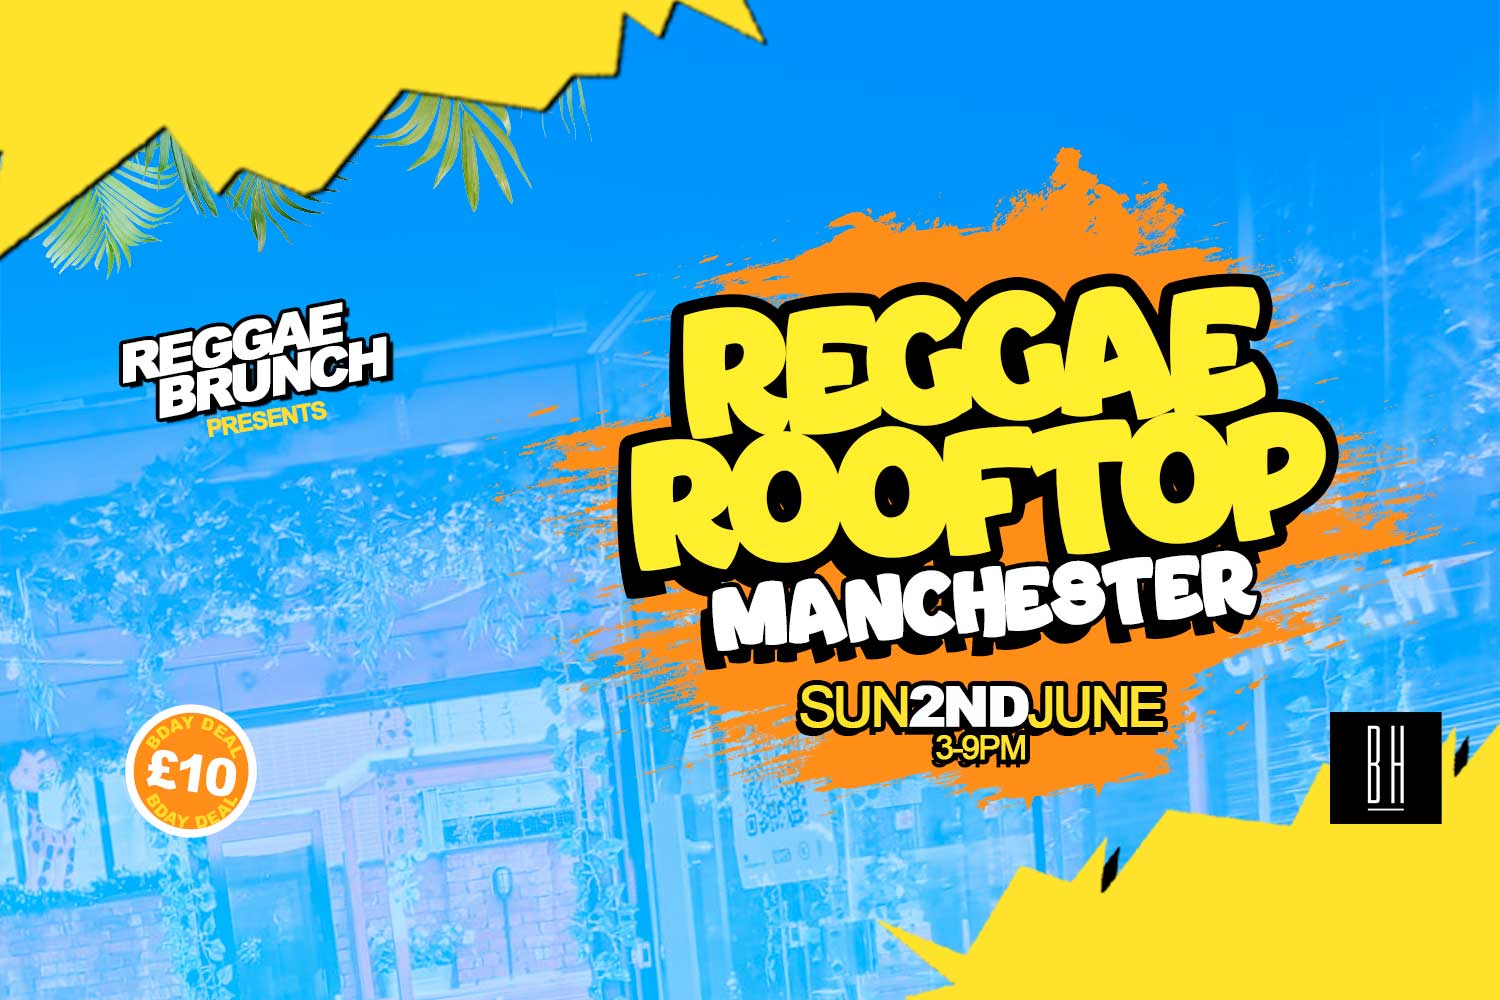 Sun, 2nd June | Reggae Rooftop